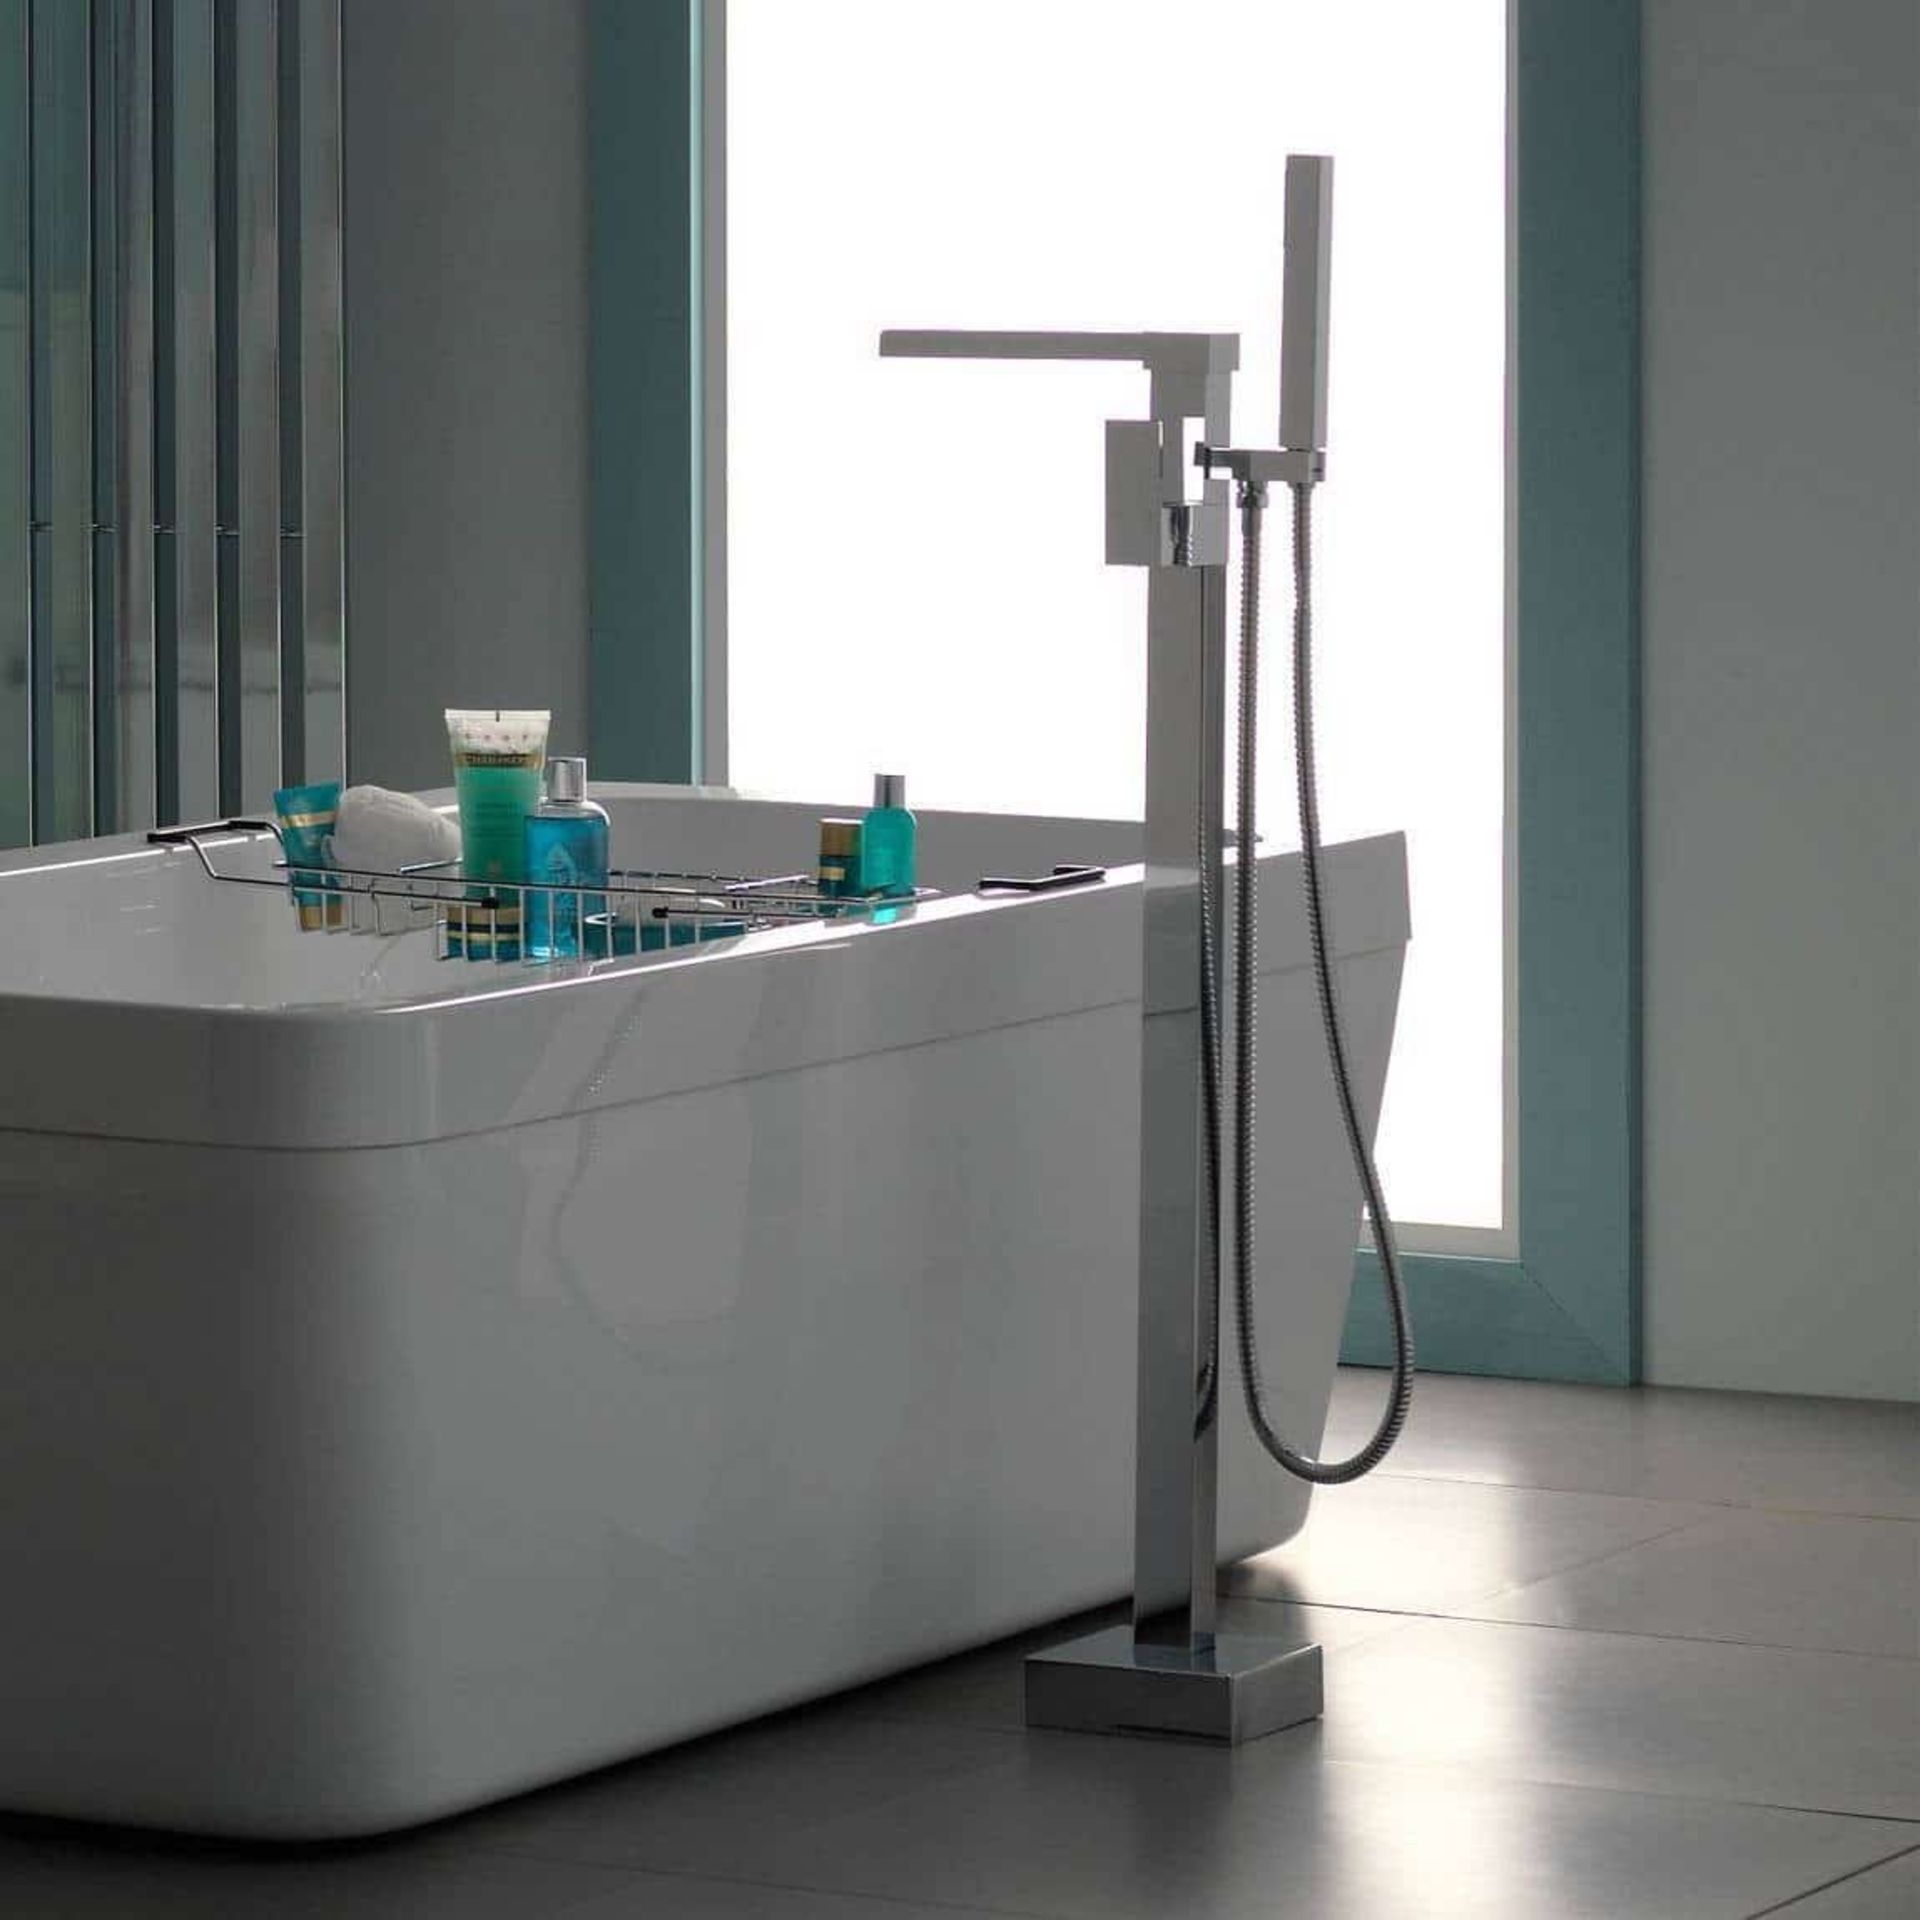 NEW (F8) Cuboid Freestanding Square Bath Shower Mixer Tap. Stunning Free standing bath shower t... - Image 3 of 3